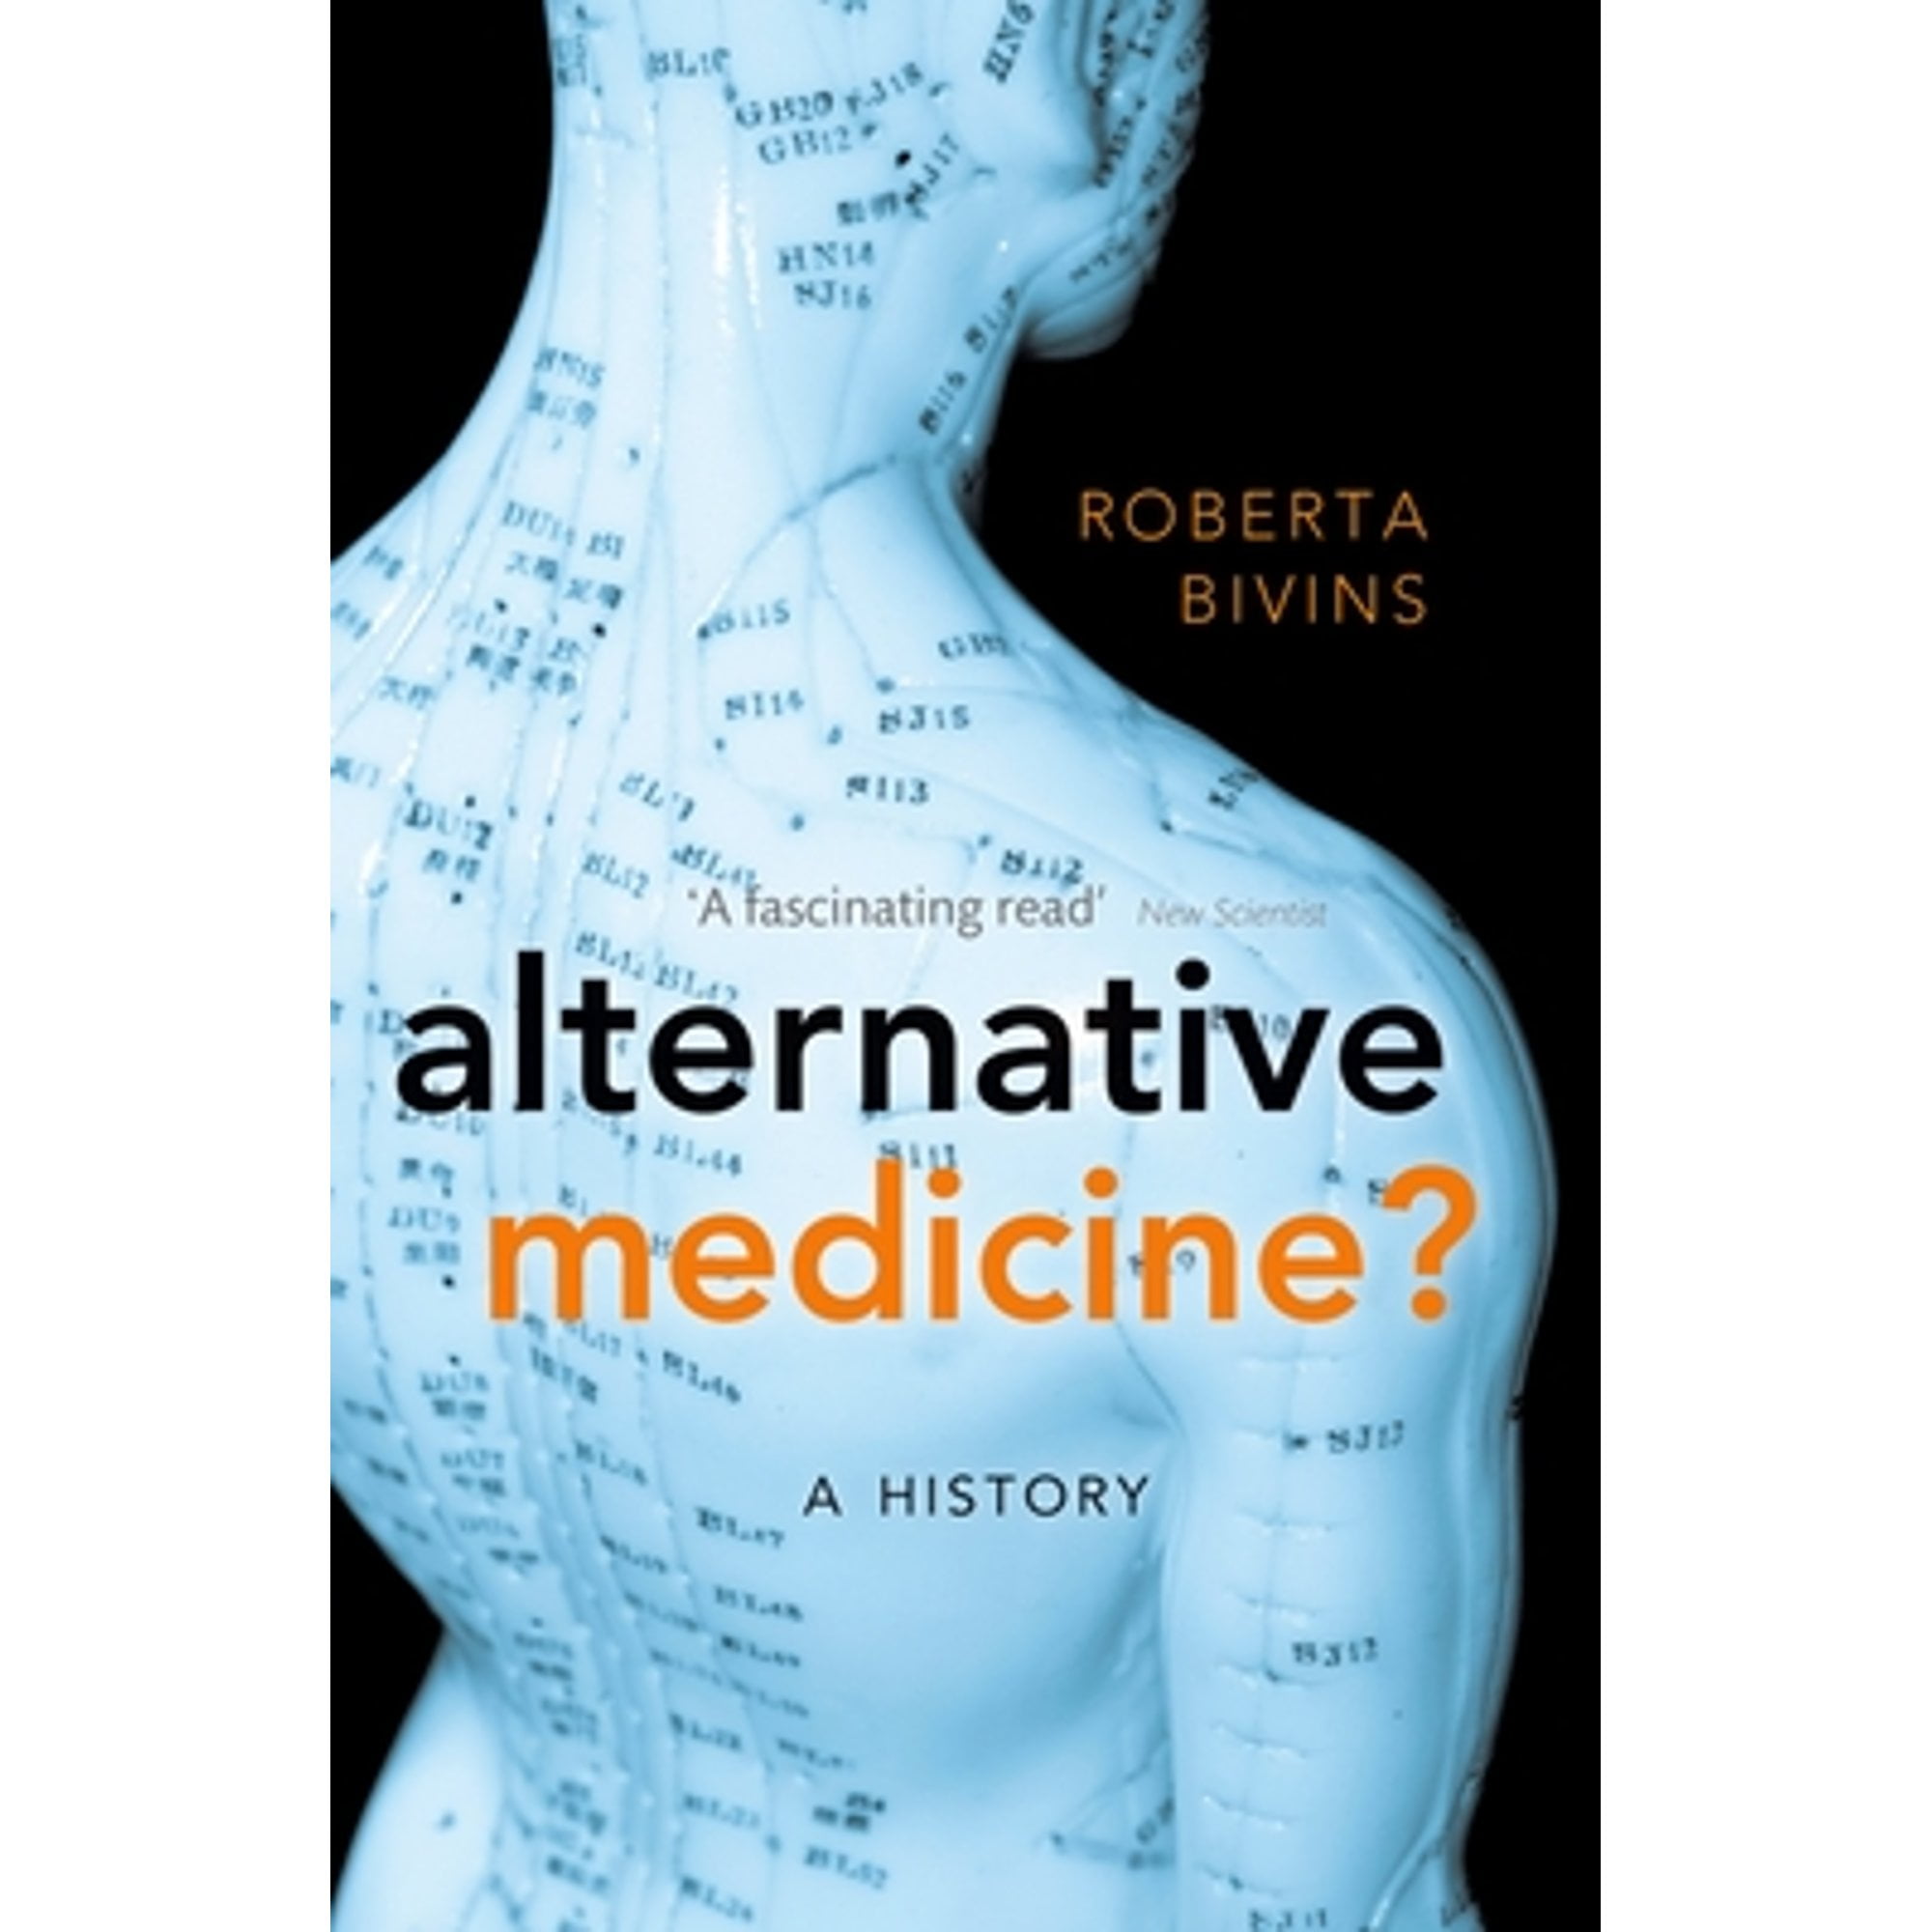 Pre-Owned Alternative Medicine?: A History (Paperback) by Roberta Bivins